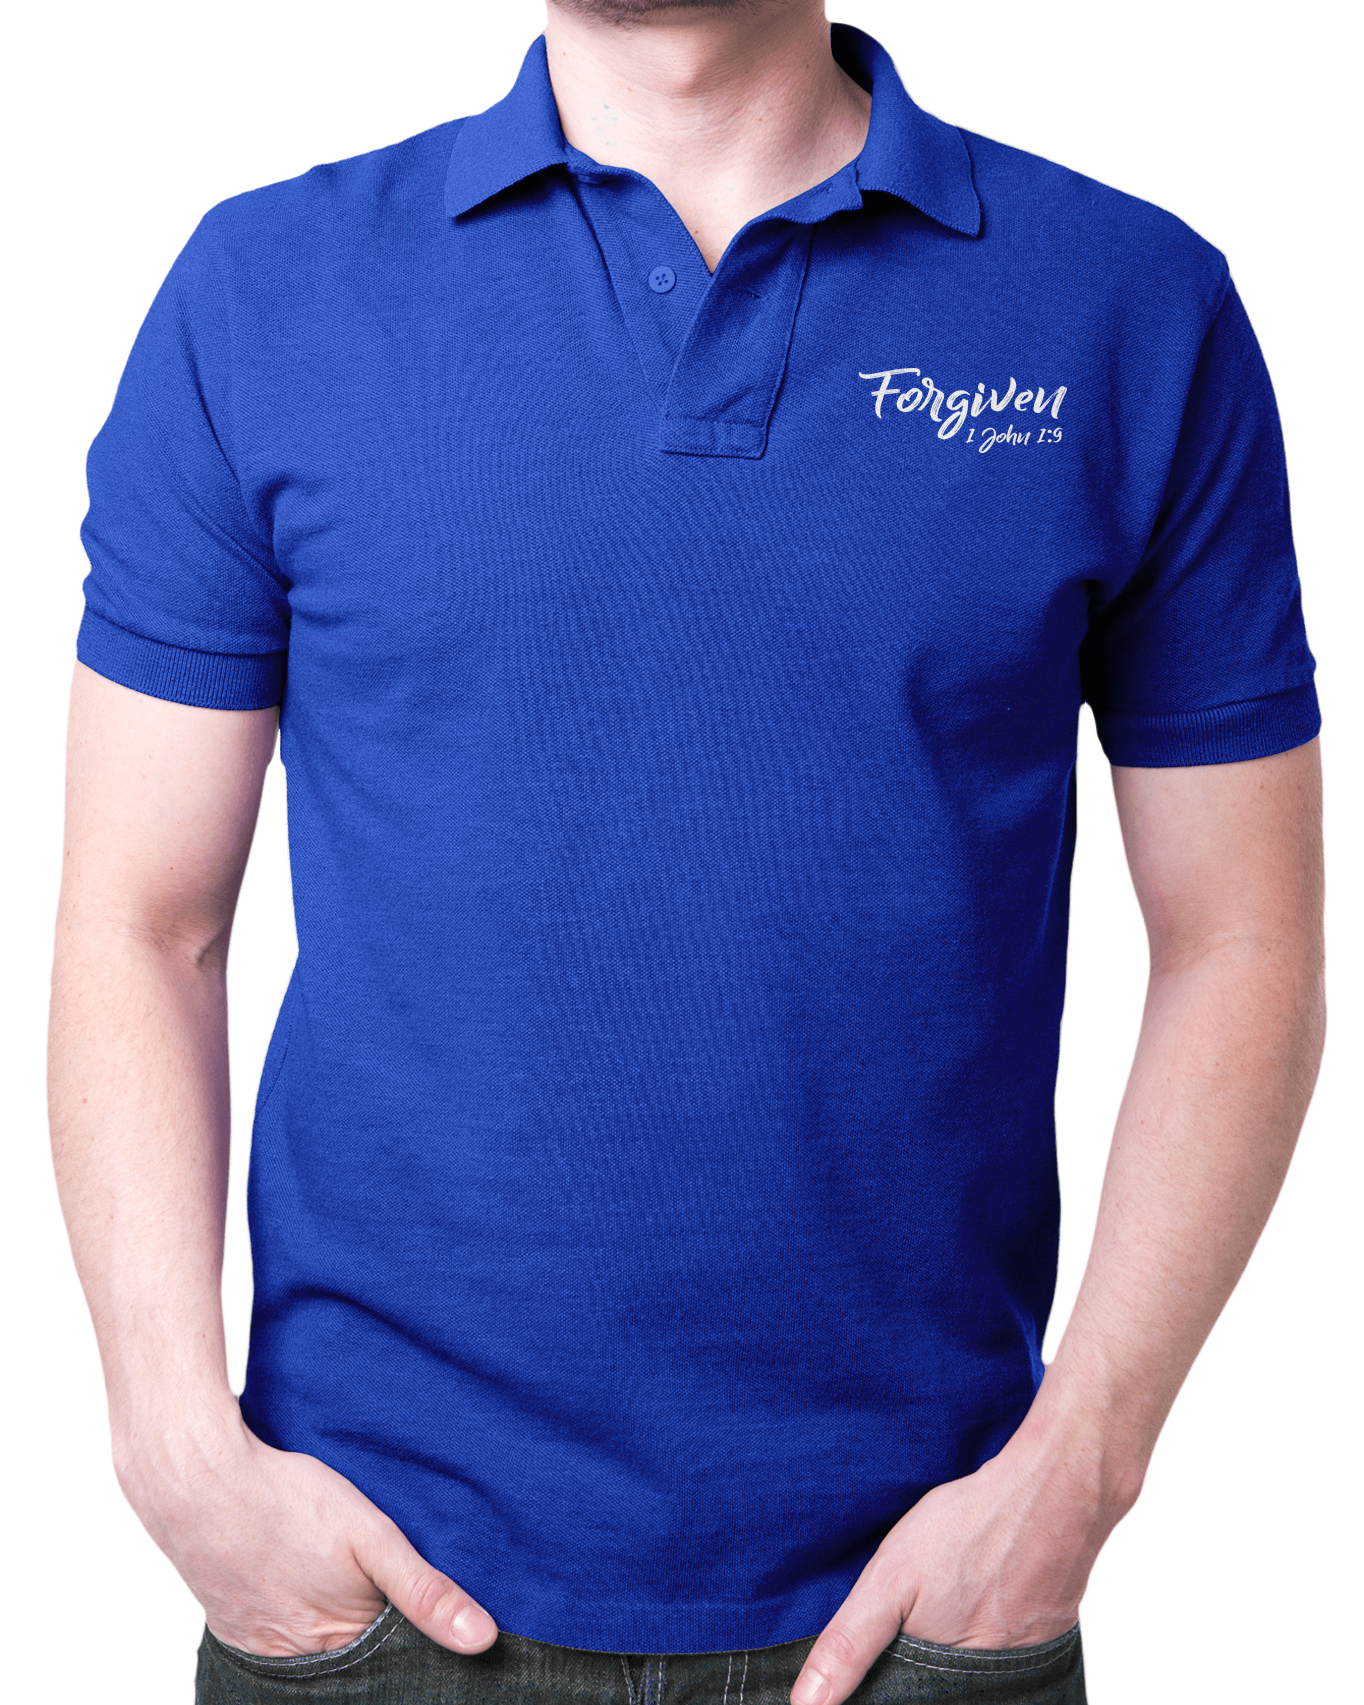 Living Words Men Polo T Shirt S / Royal Blue Forgiven - Polo T Shirt